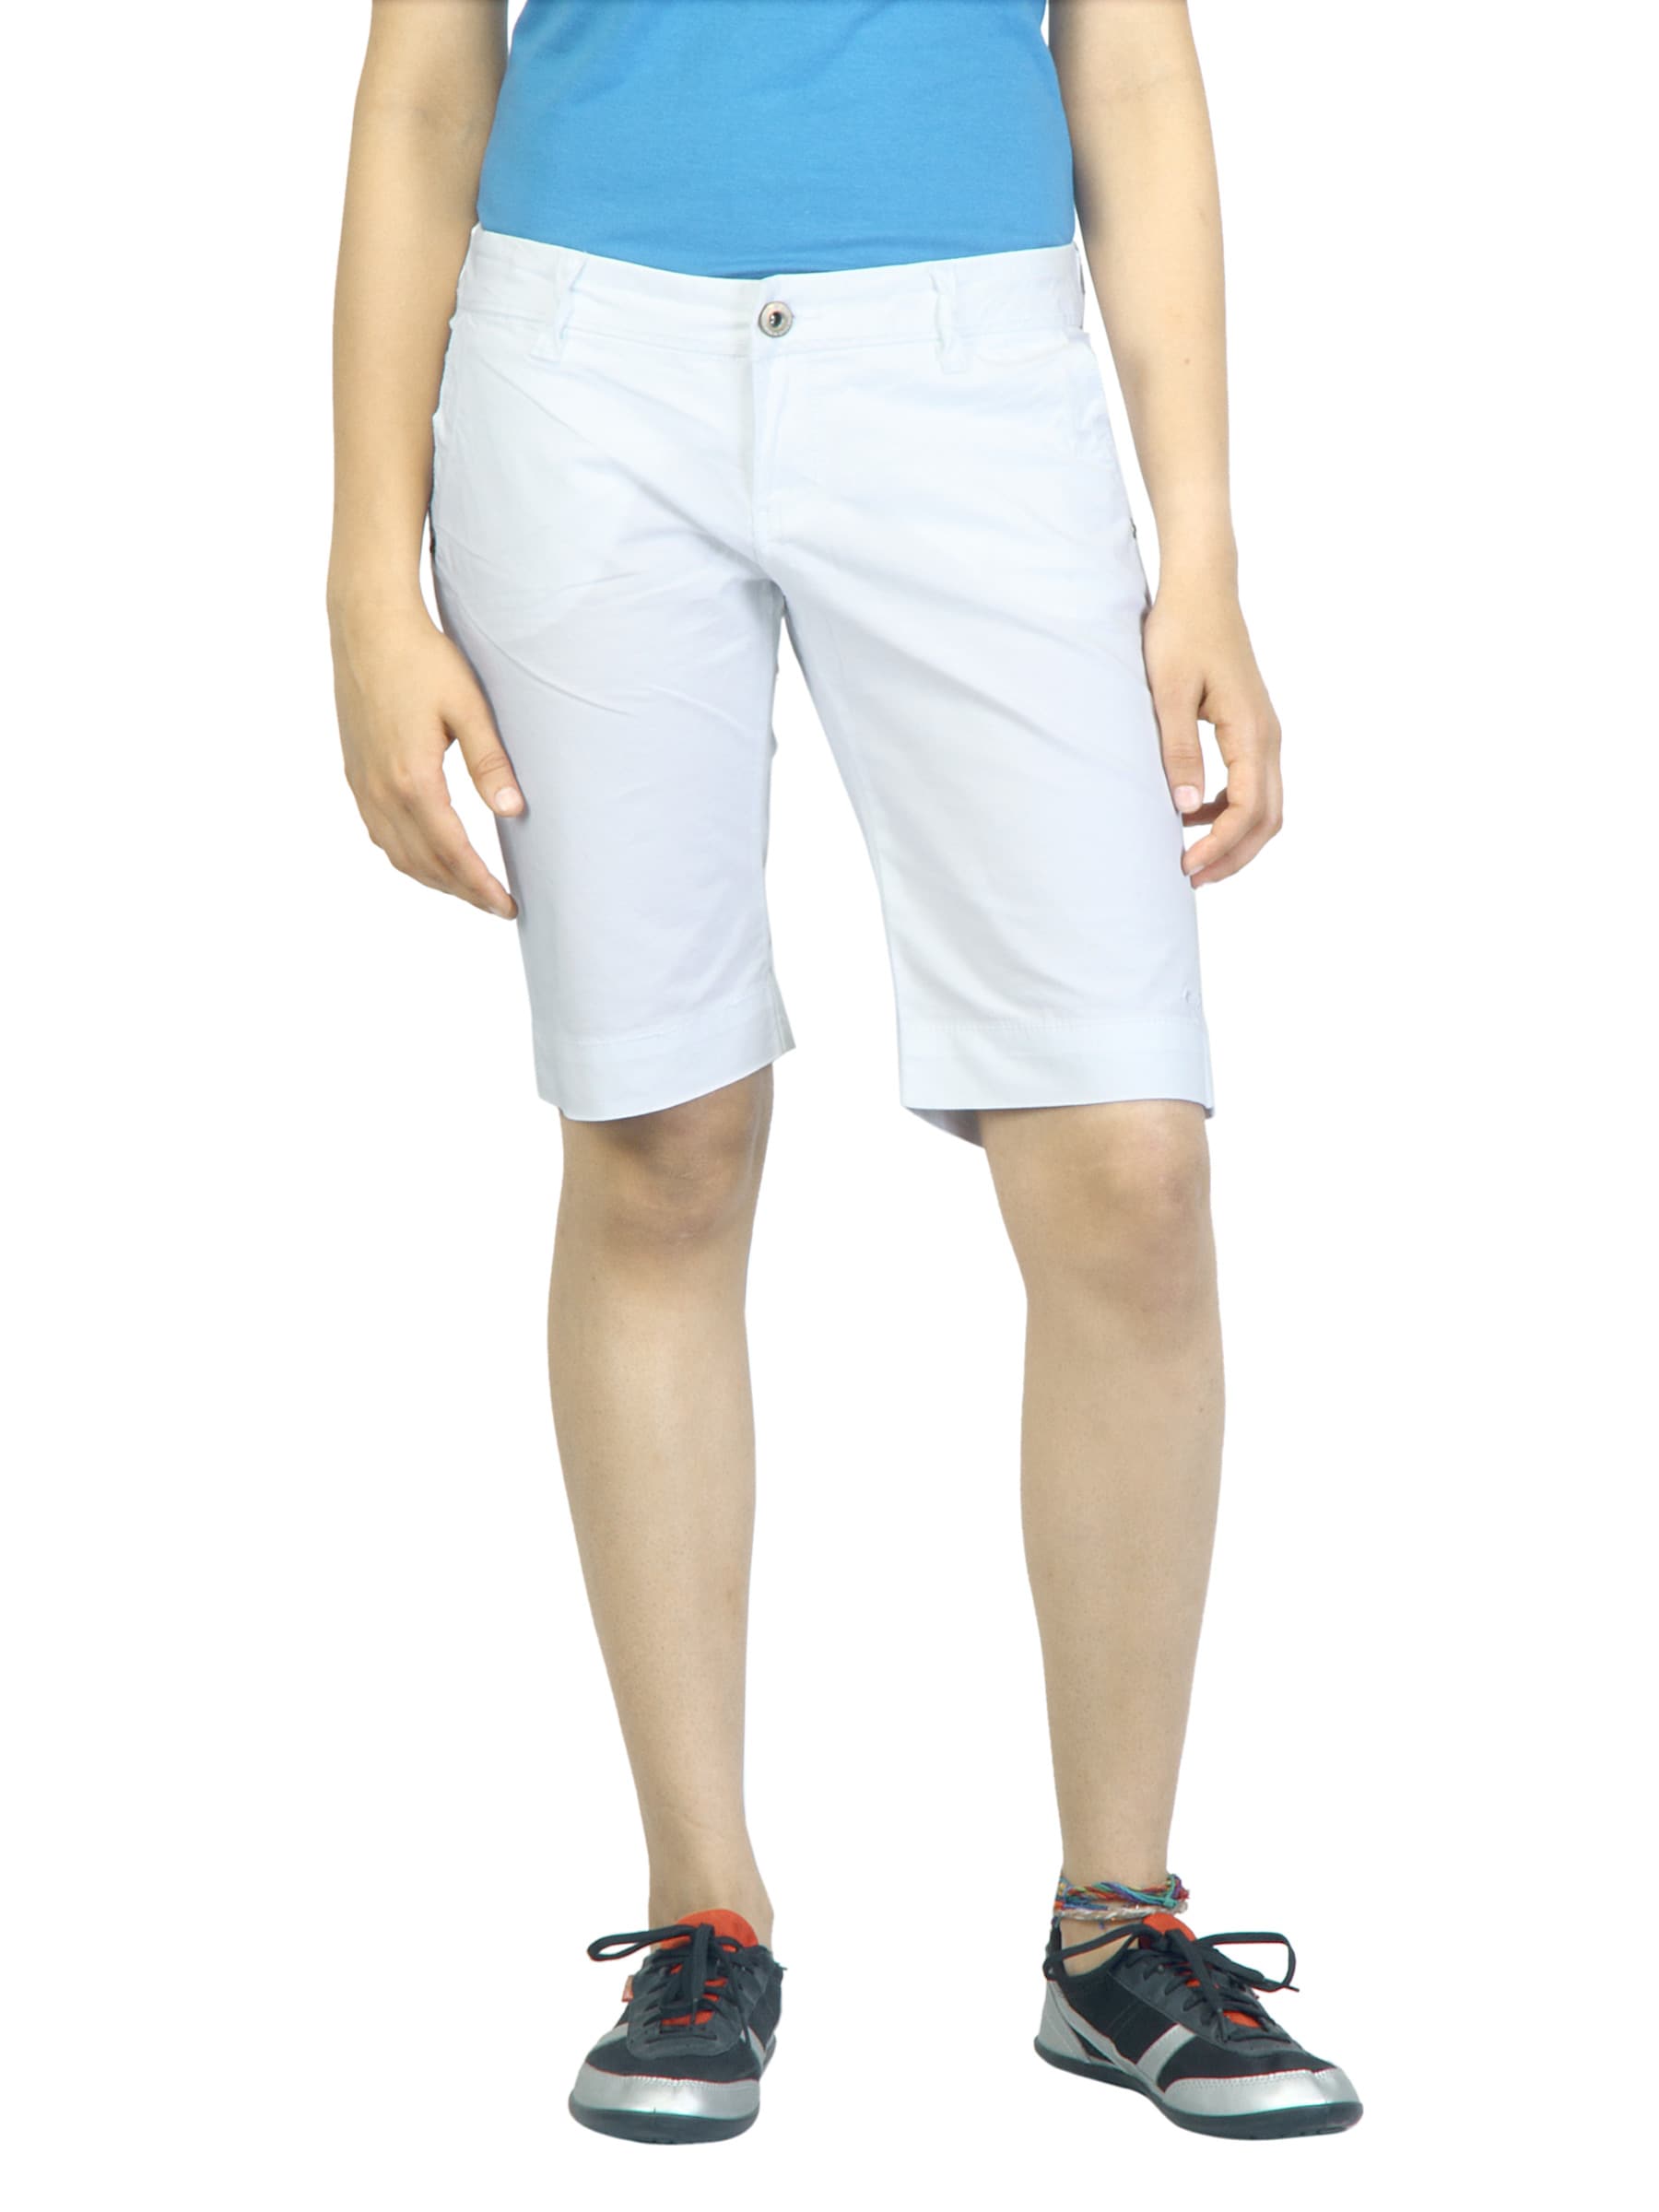 Roxy Women White Shorts